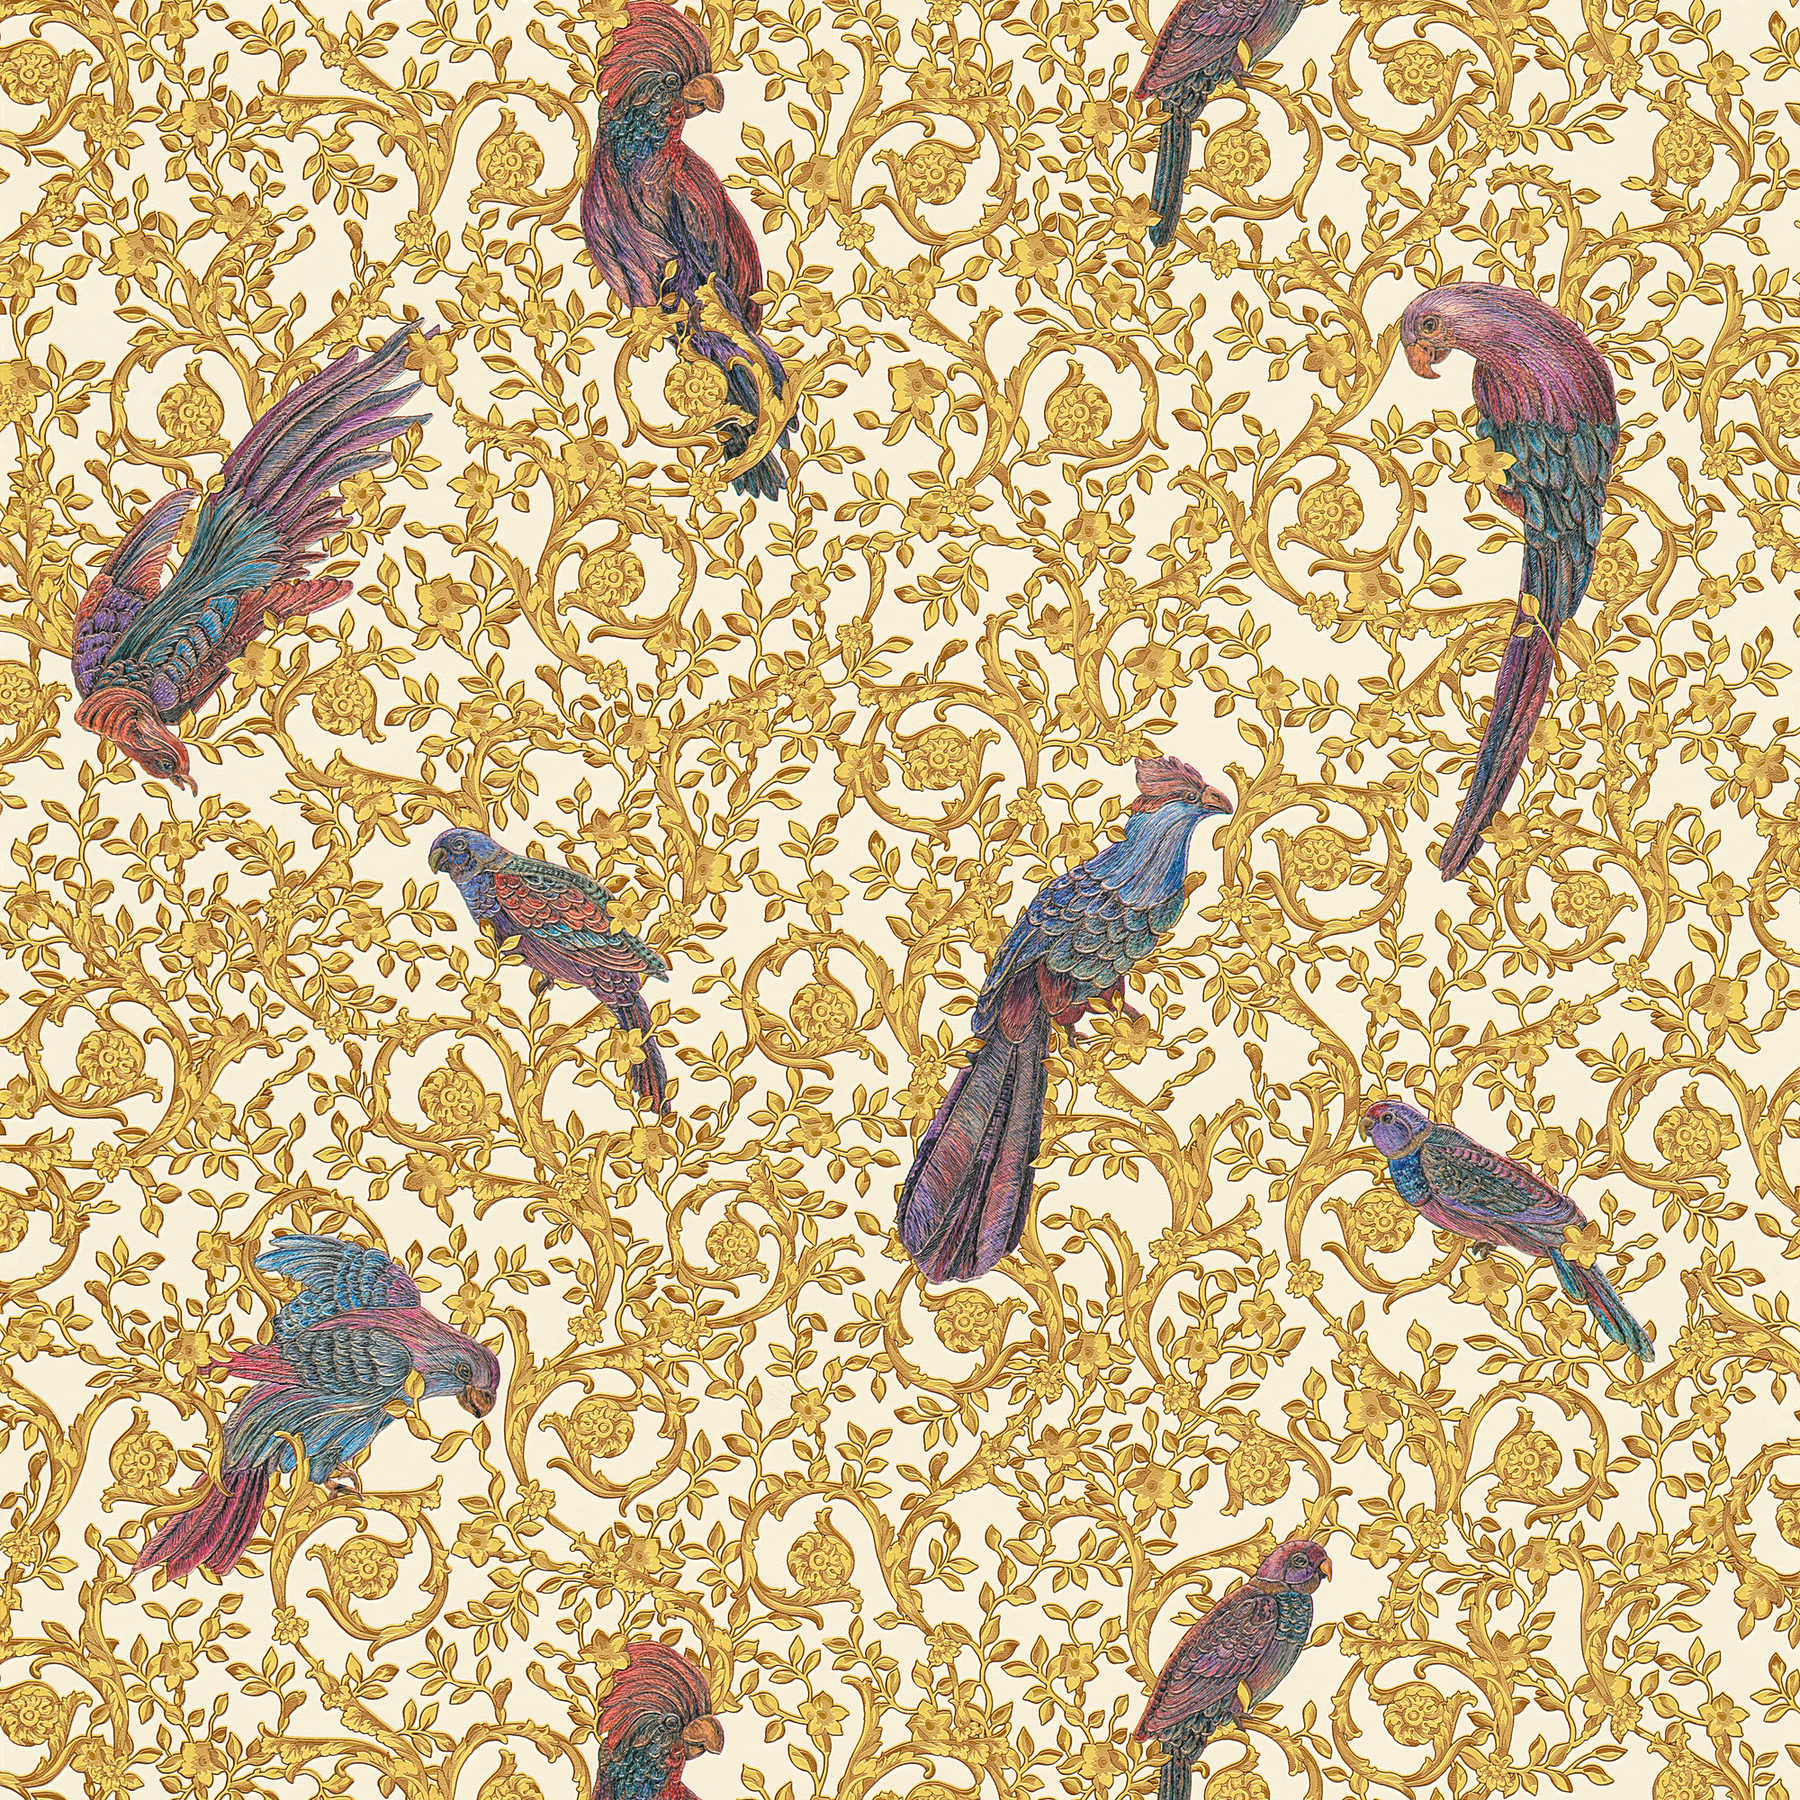 VERSACE Home wallpaper paradise birds & golden accents - gold, purple, cream
